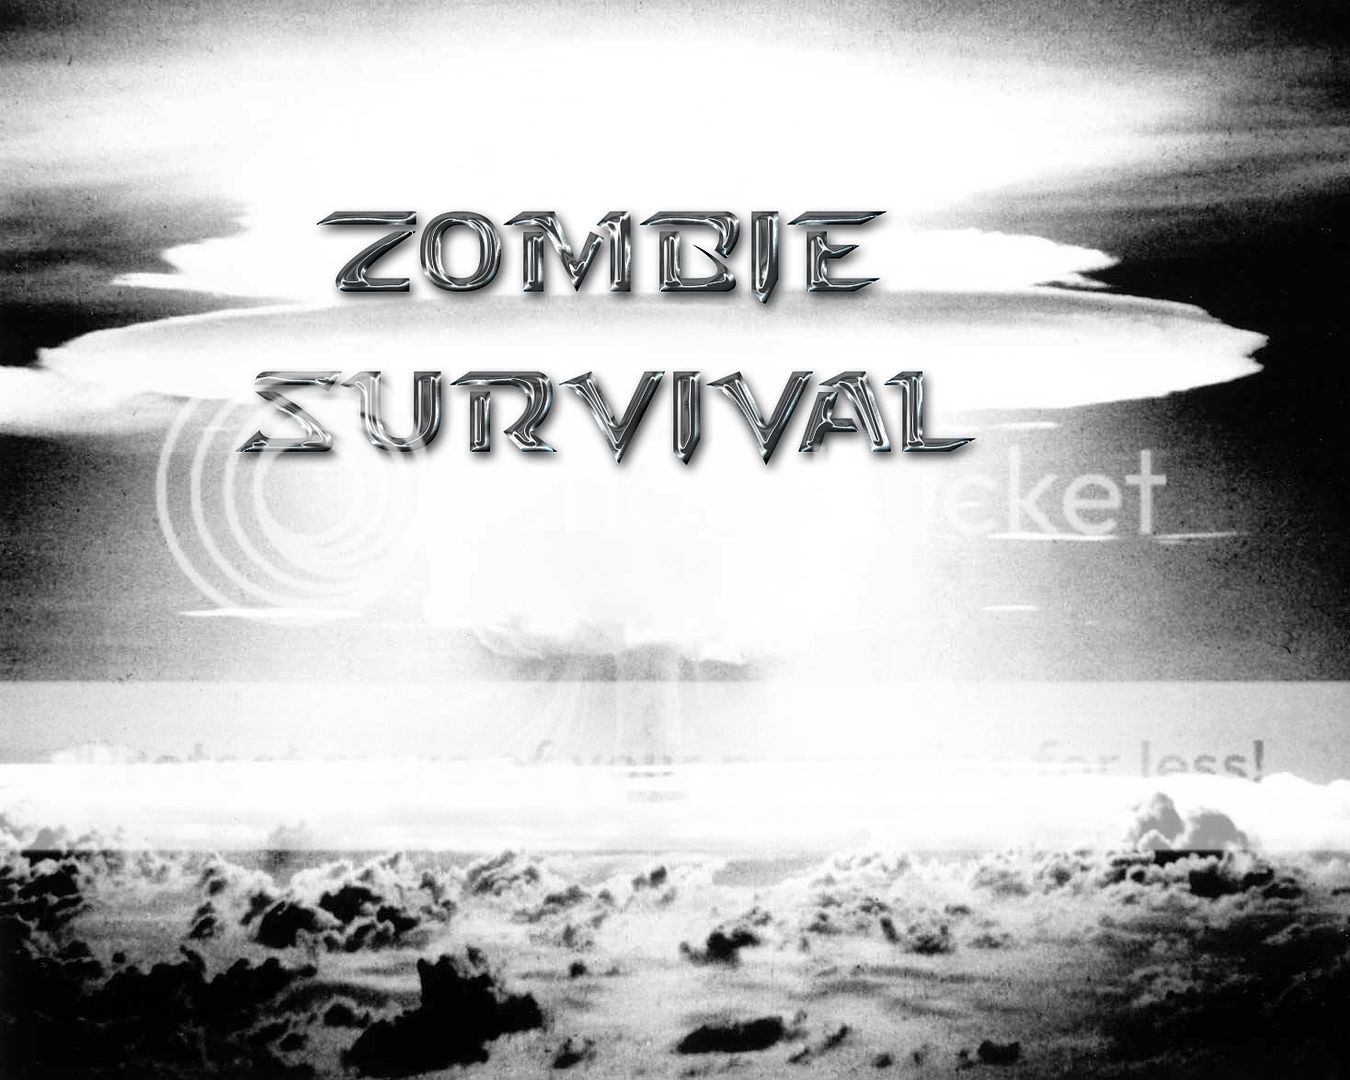 ZombieSurvival.jpg